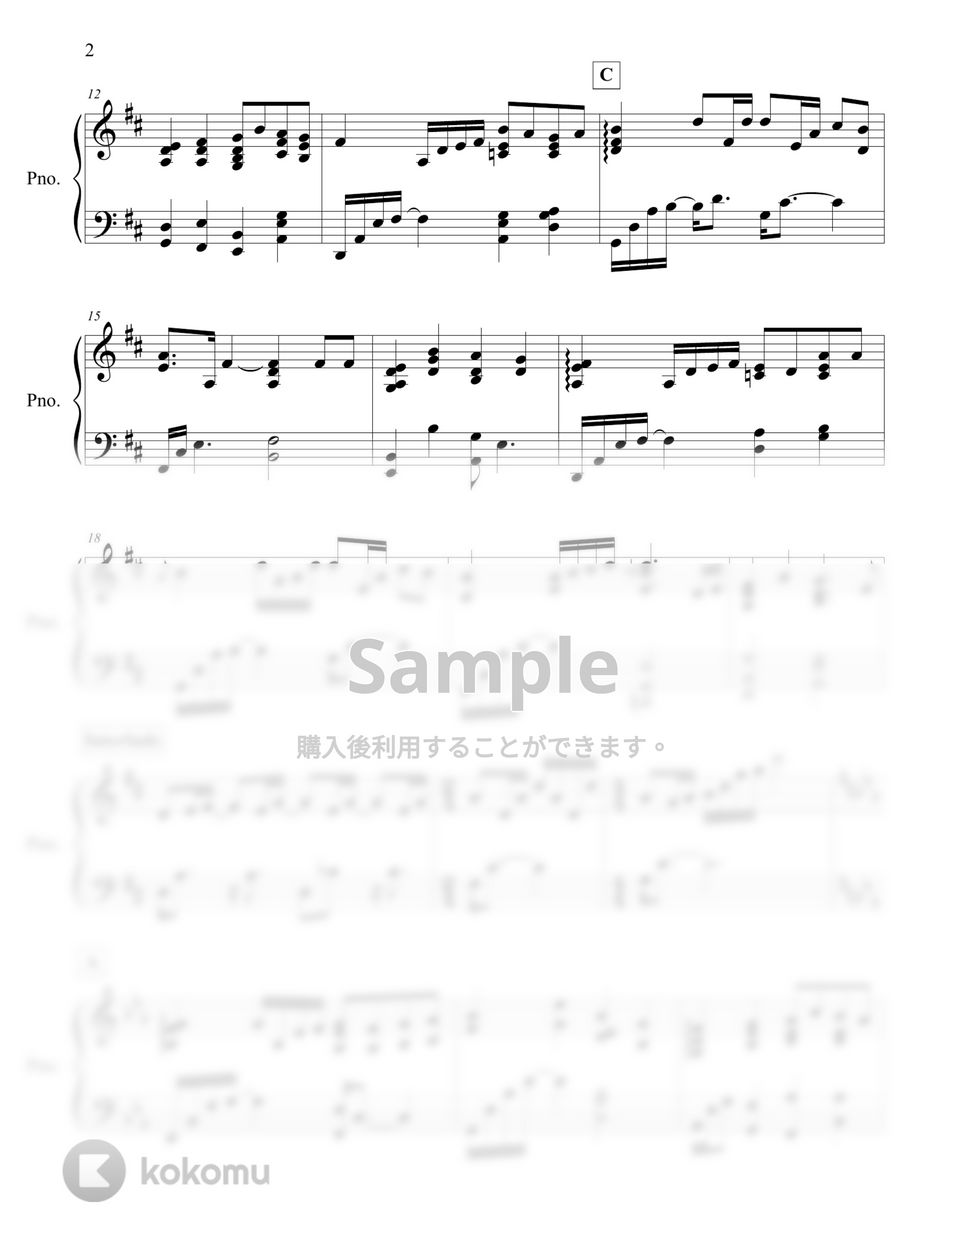 W.B Bradbury - Savior, Like a Shpherd Lead Us(선한 목자 되신 우리 주) (19th Album) by Keunyoung Song